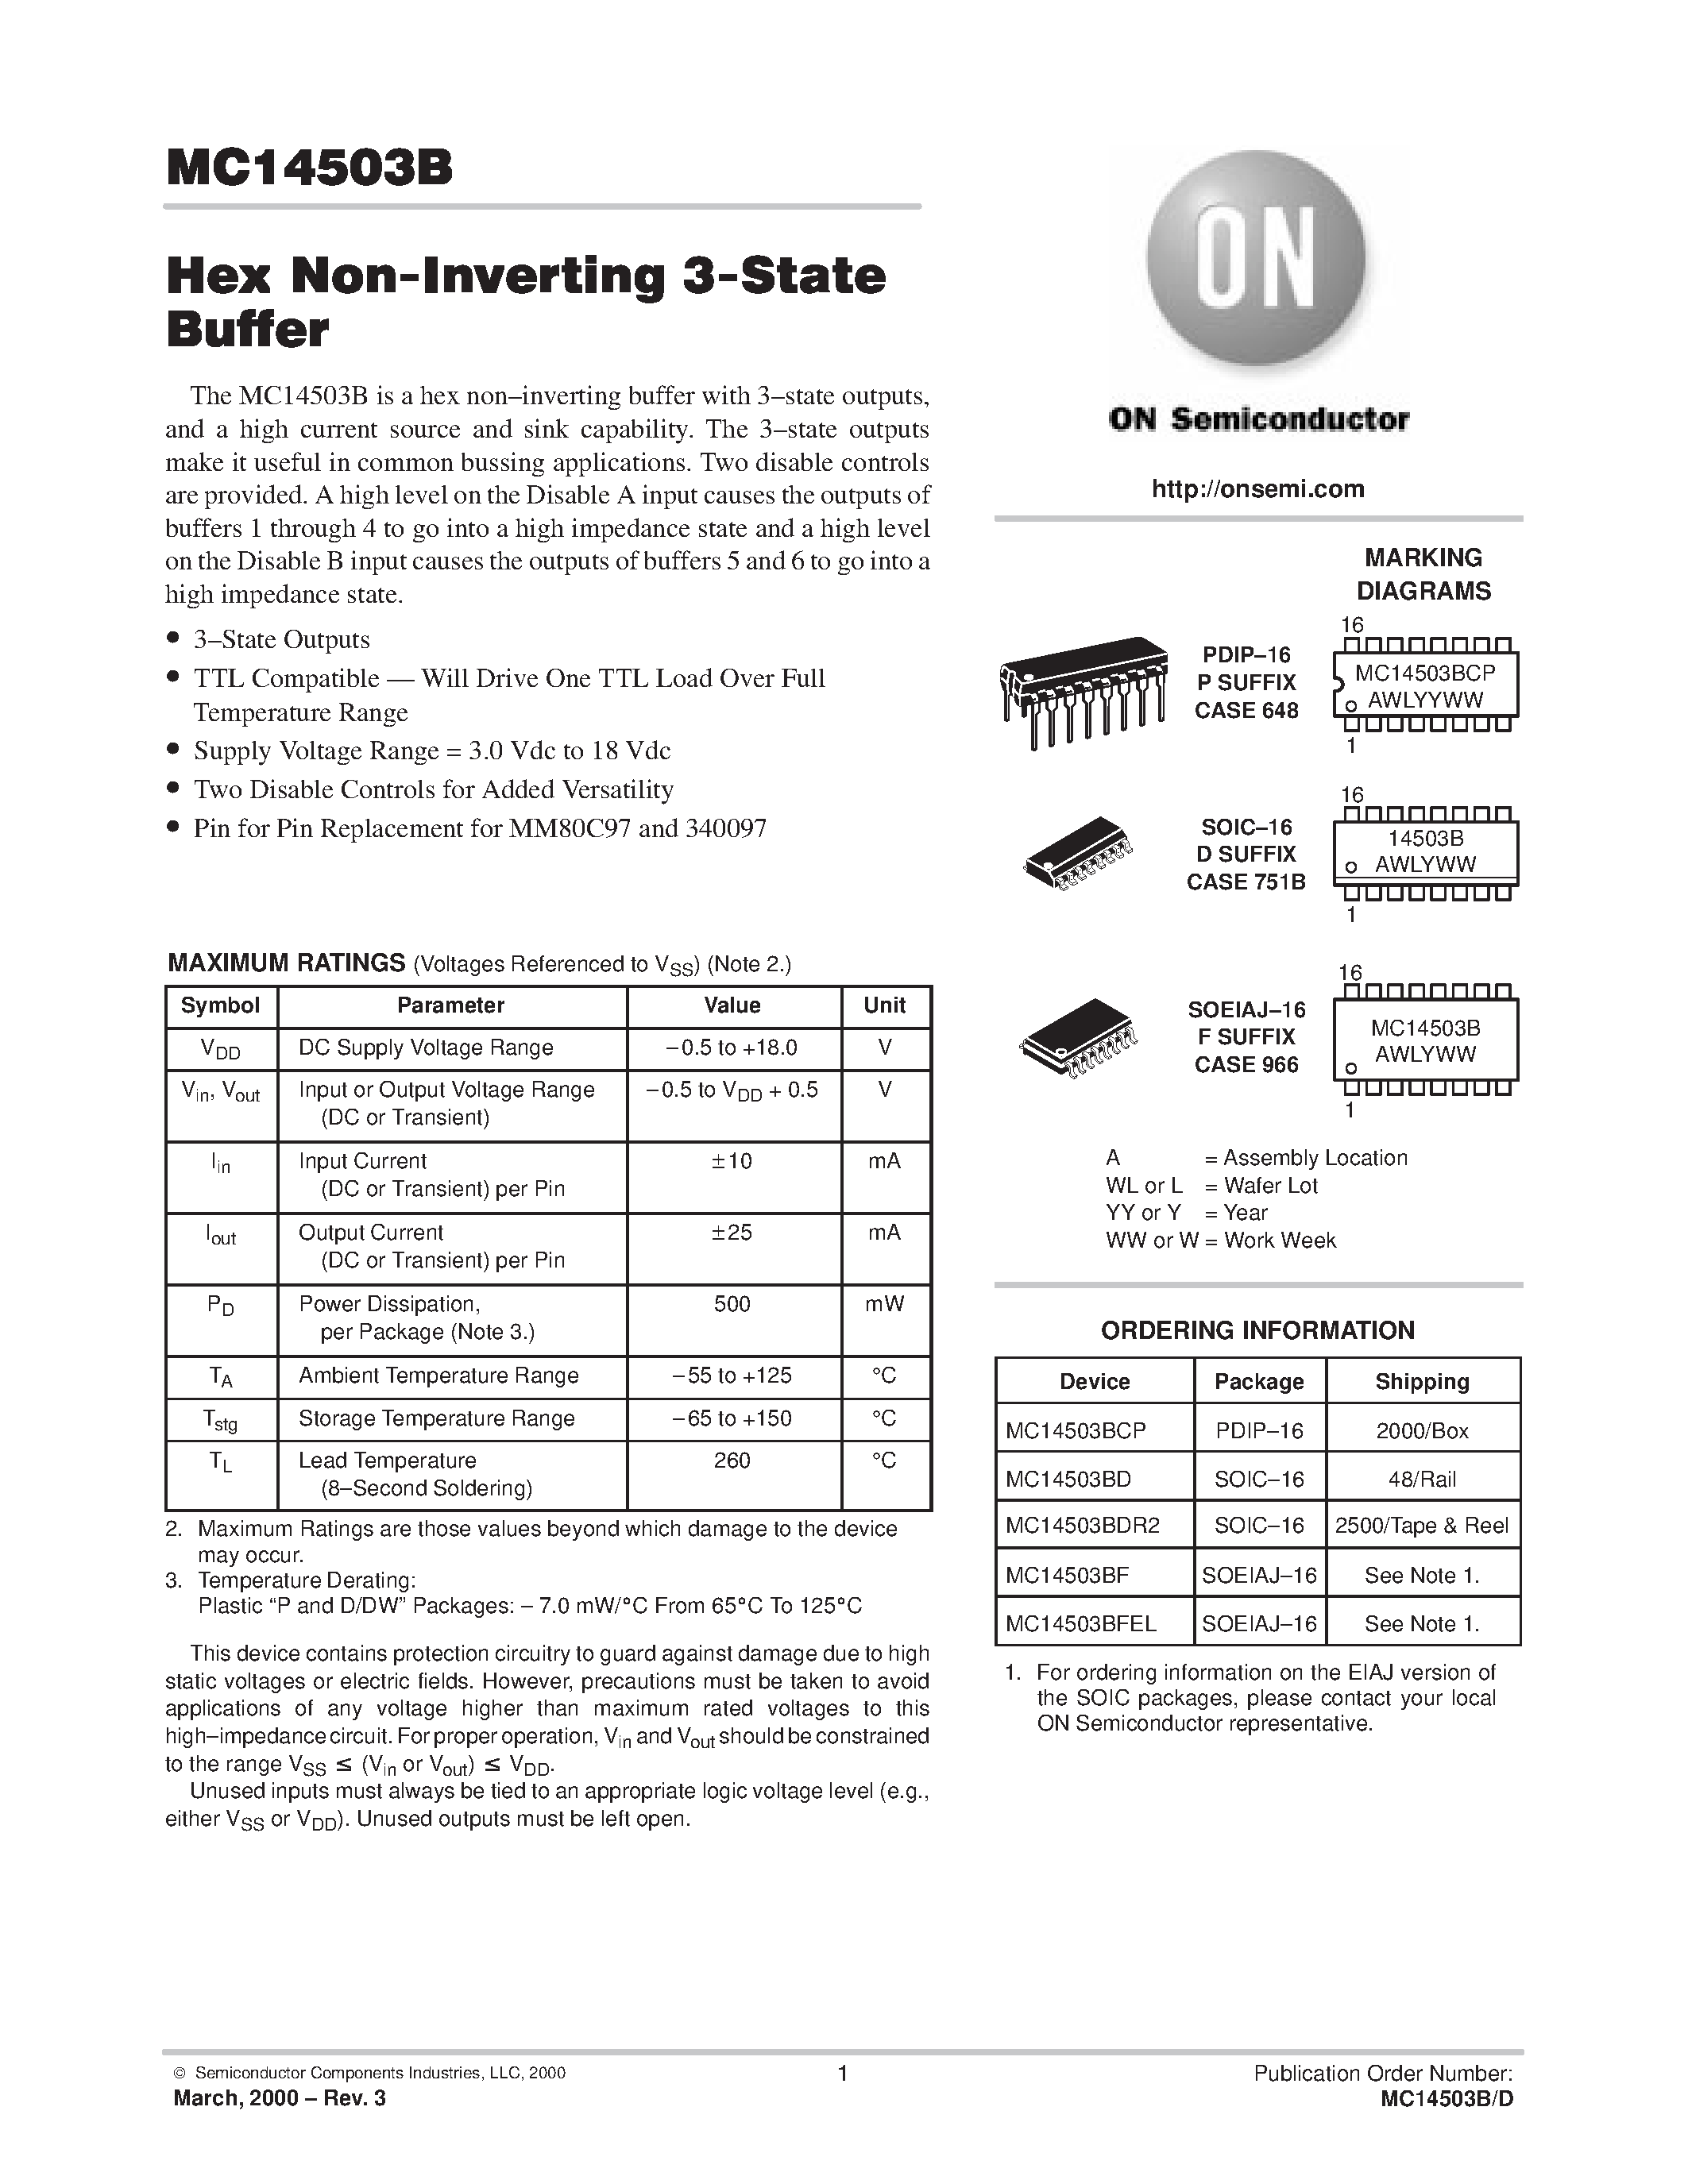 Datasheet MC14503B - Hex Non-Inverting 3-State Buffer page 1